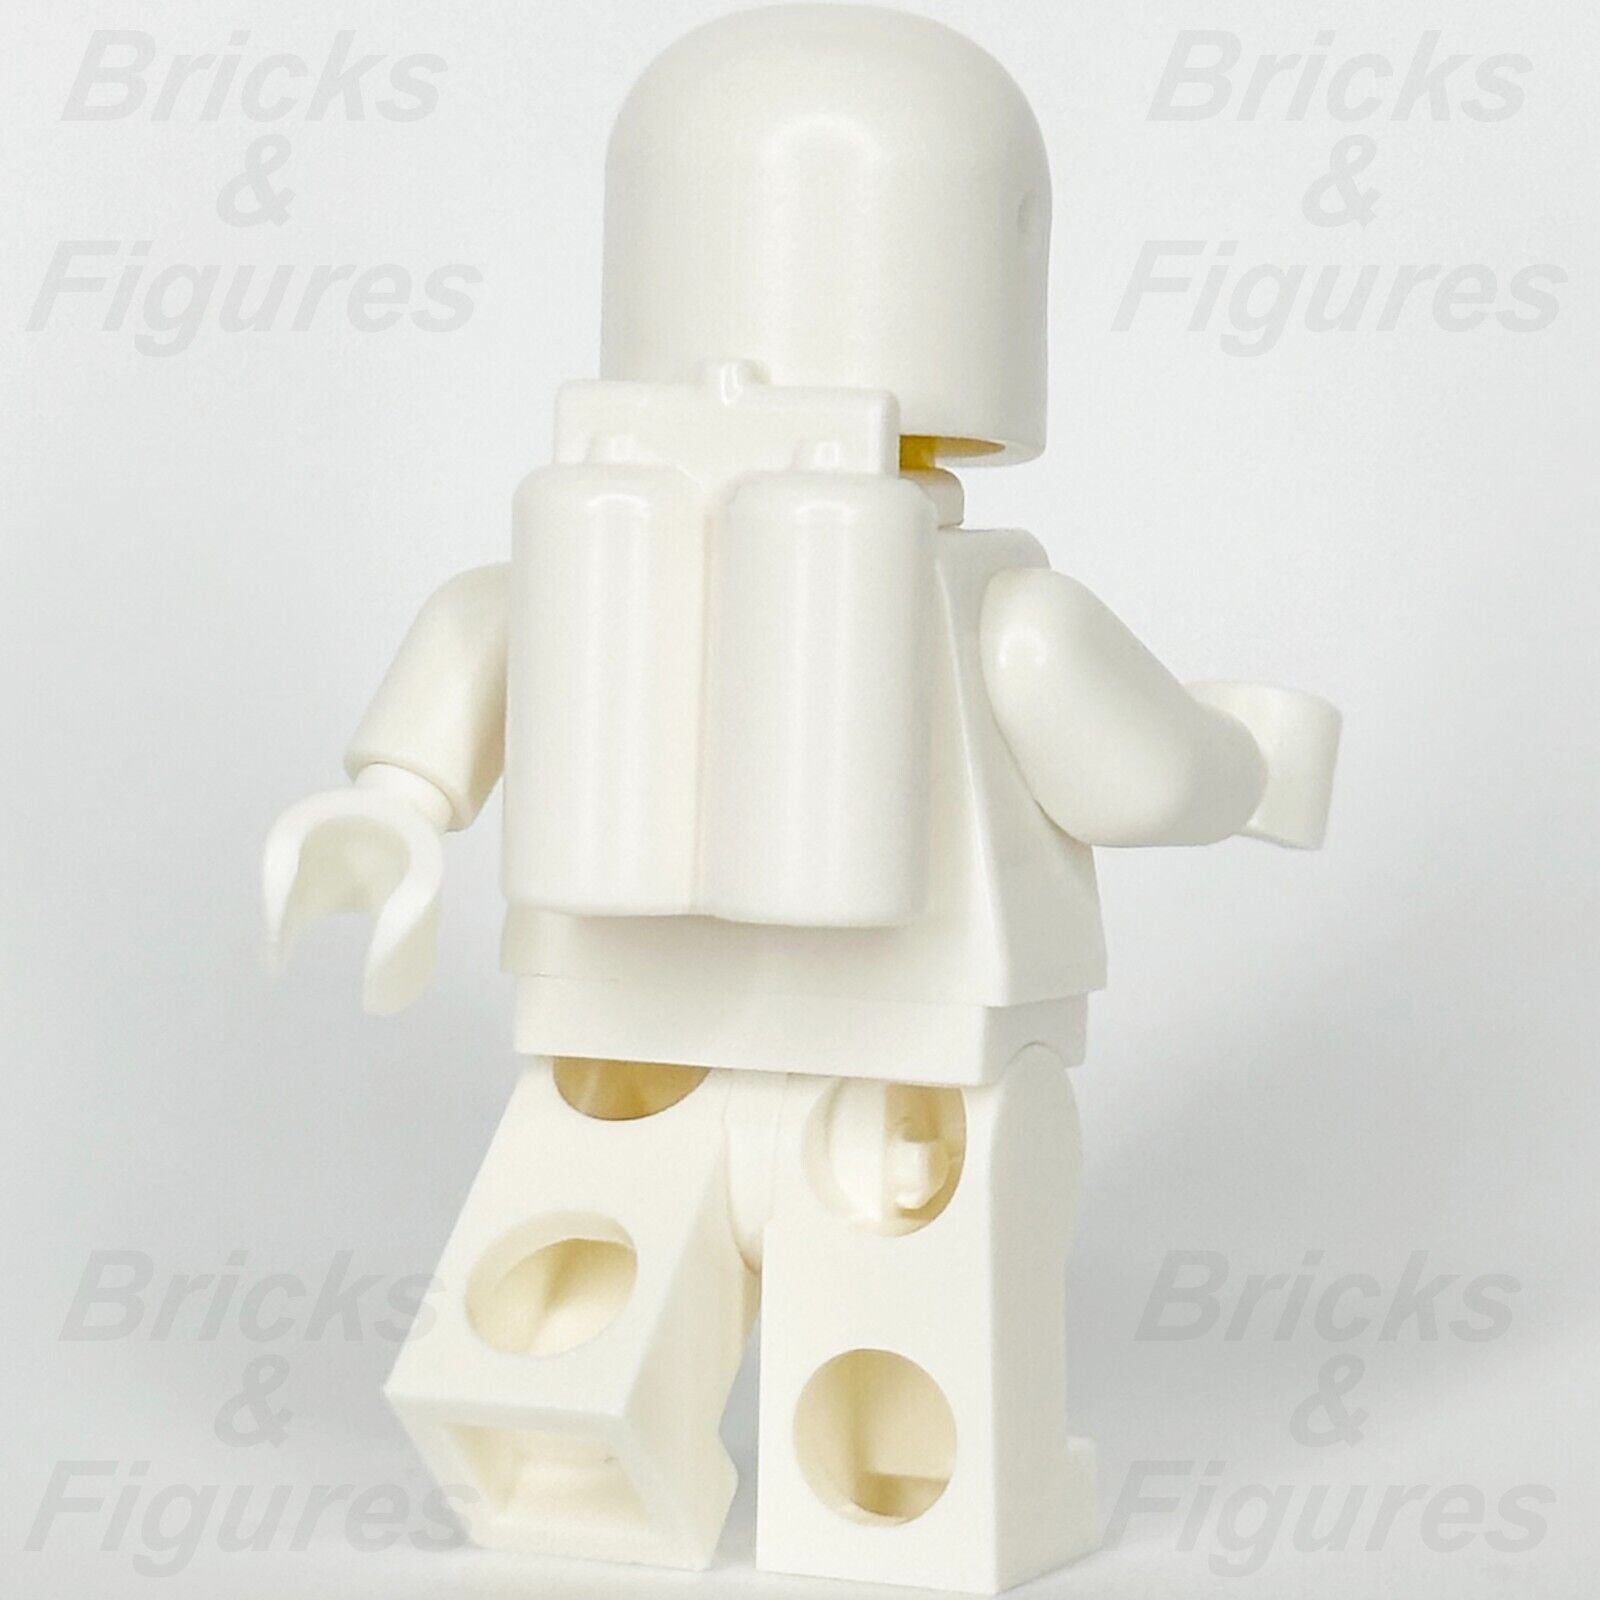 LEGO Space Jenny Minifigure White Classic The LEGO Movie 2 70841 10497 tlm110